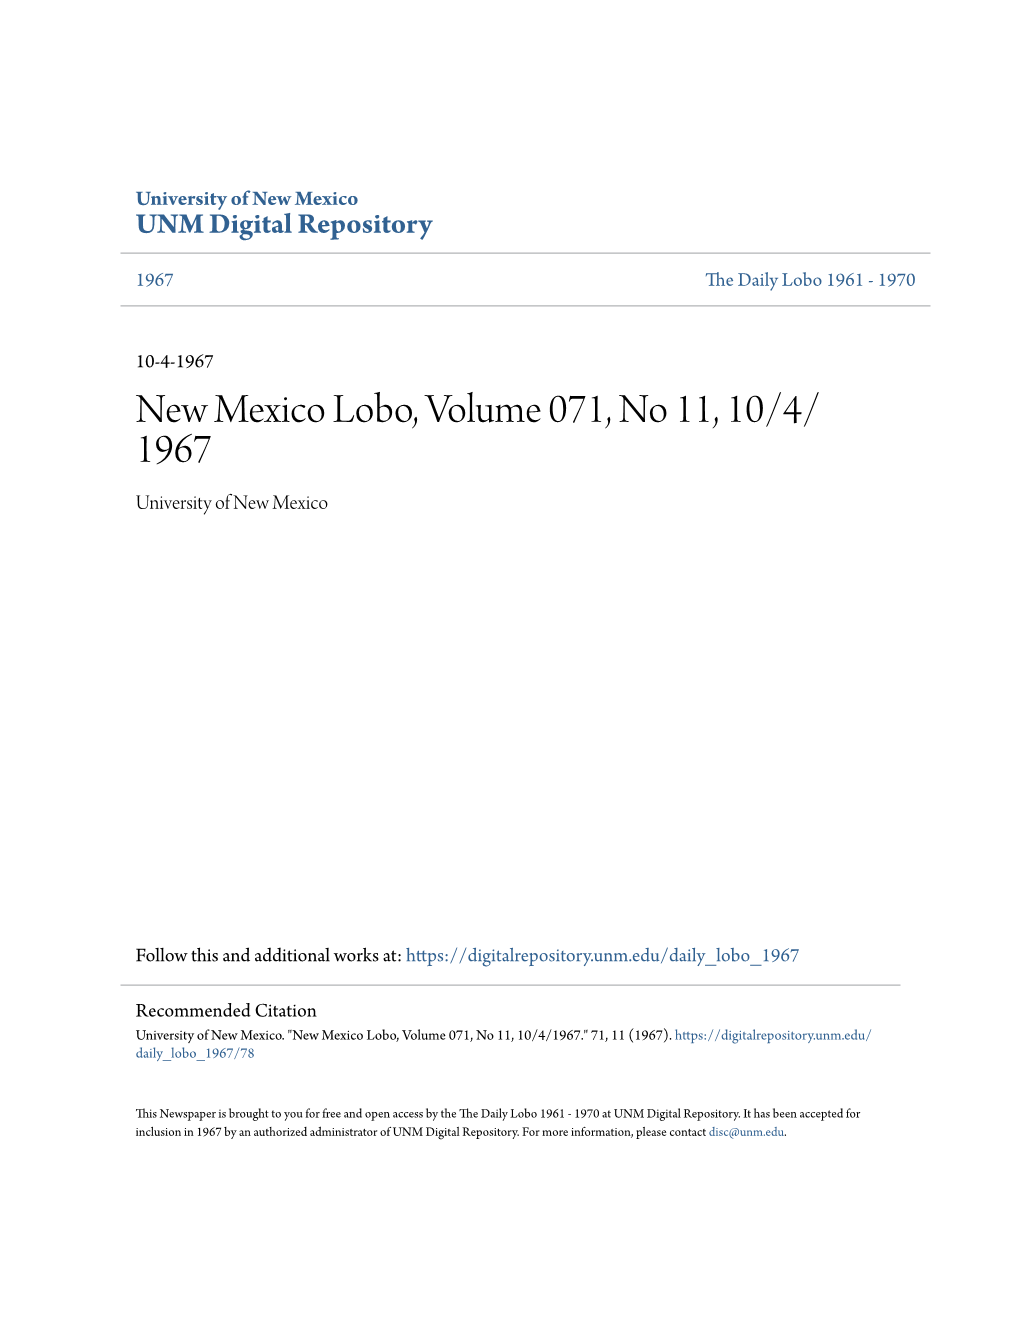 New Mexico Lobo, Volume 071, No 11, 10/4/1967." 71, 11 (1967)